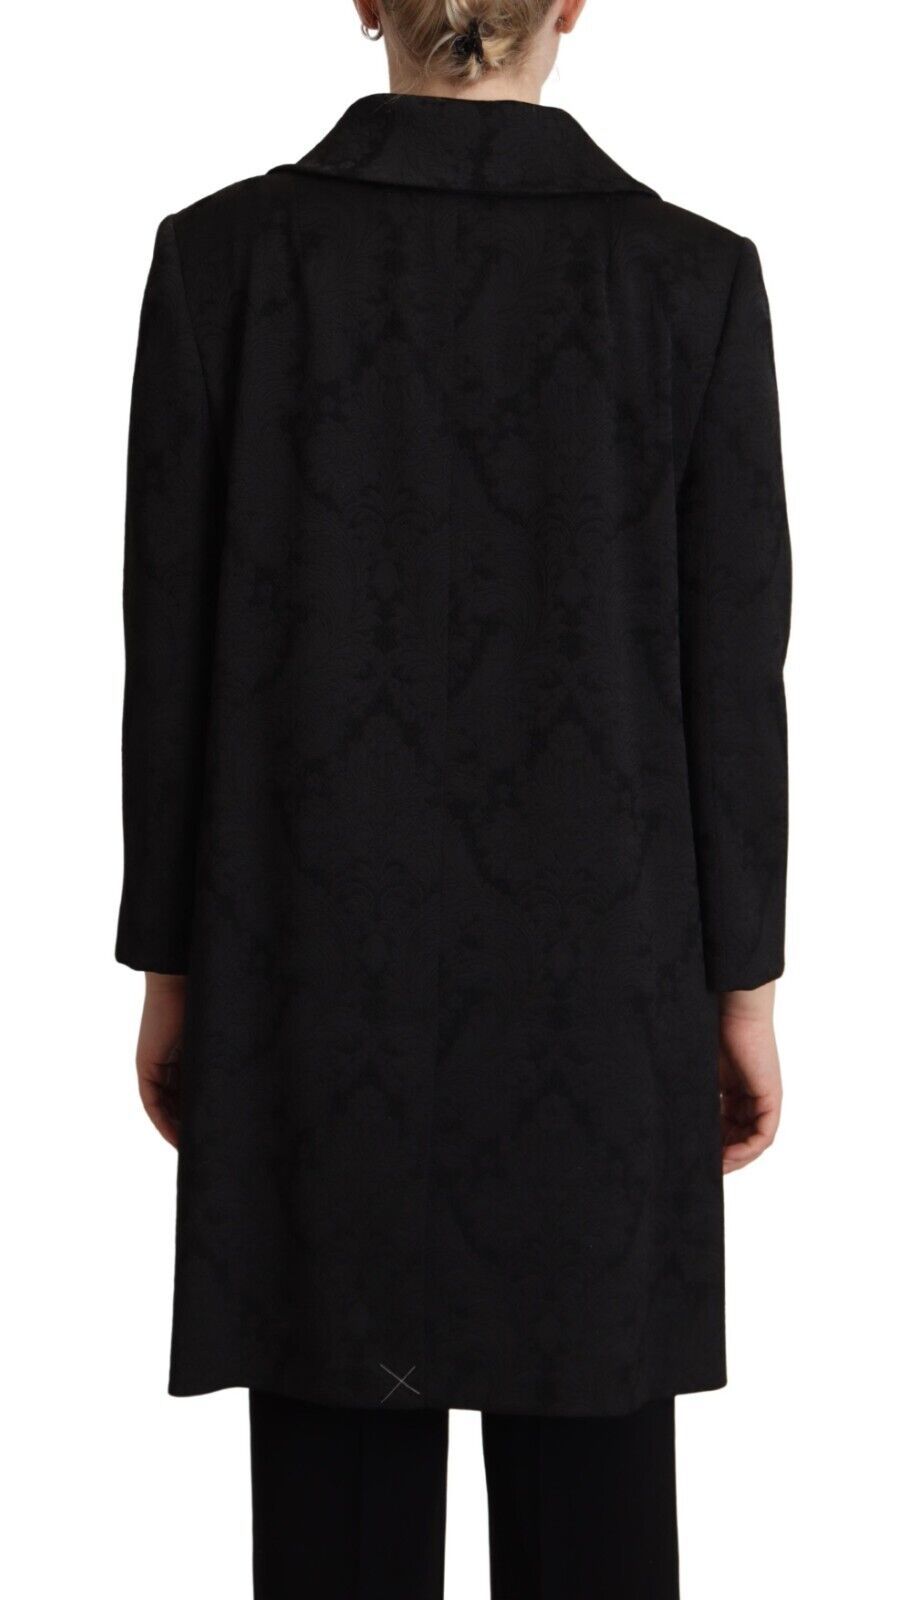 Black Brocade Polyester Long Sleeves Jacket